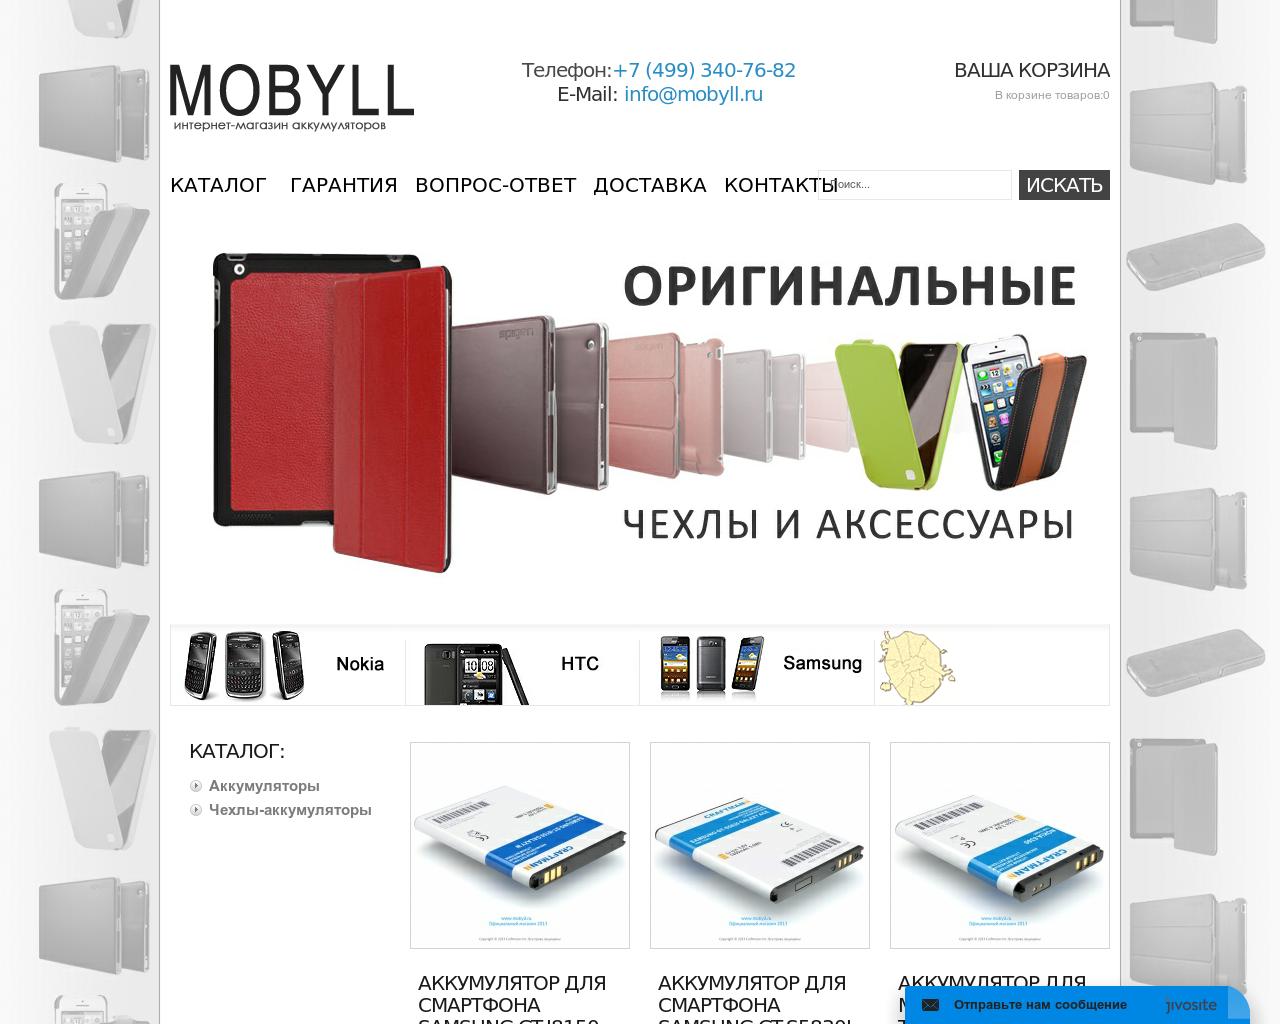 Изображение сайта mobyll.ru в разрешении 1280x1024